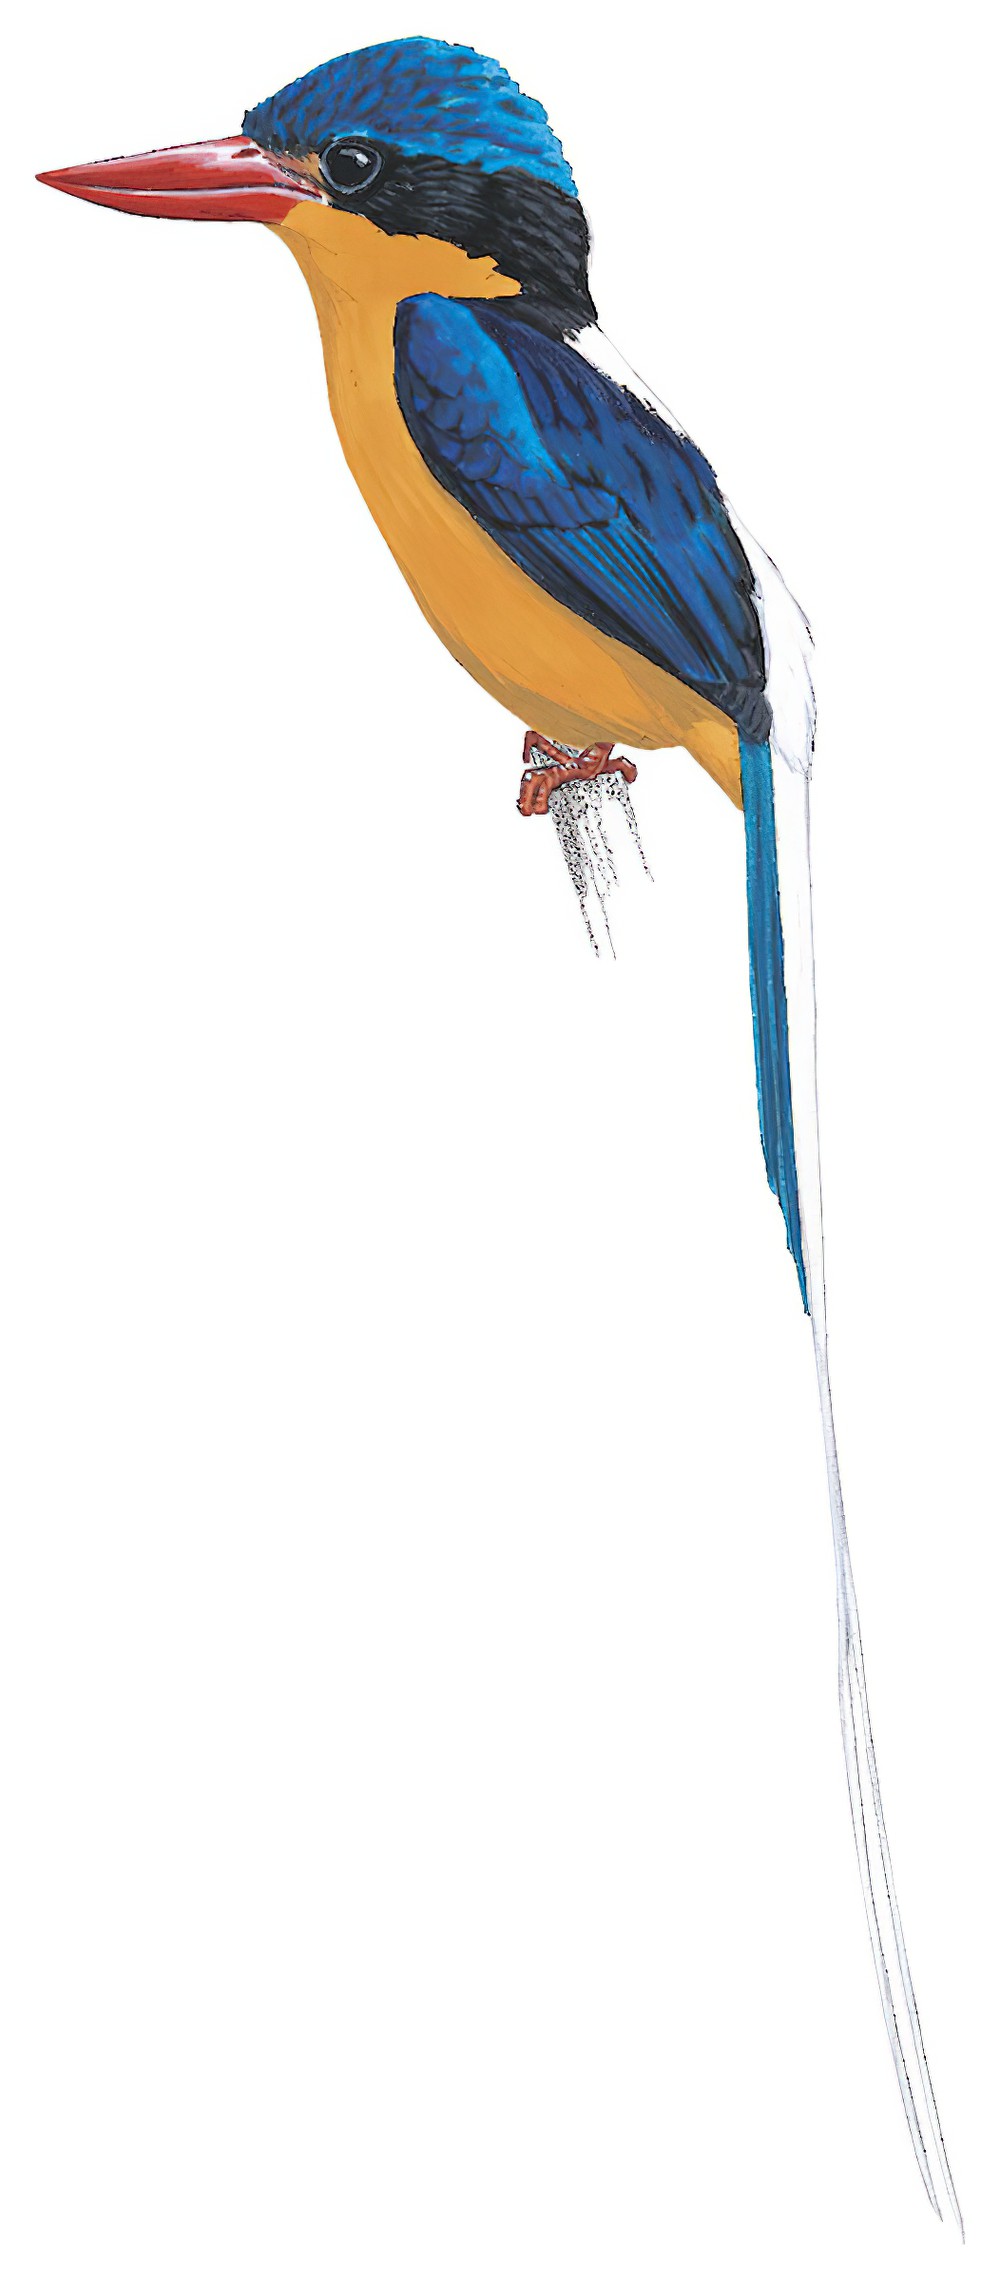 Buff-breasted Paradise-Kingfisher / Tanysiptera sylvia